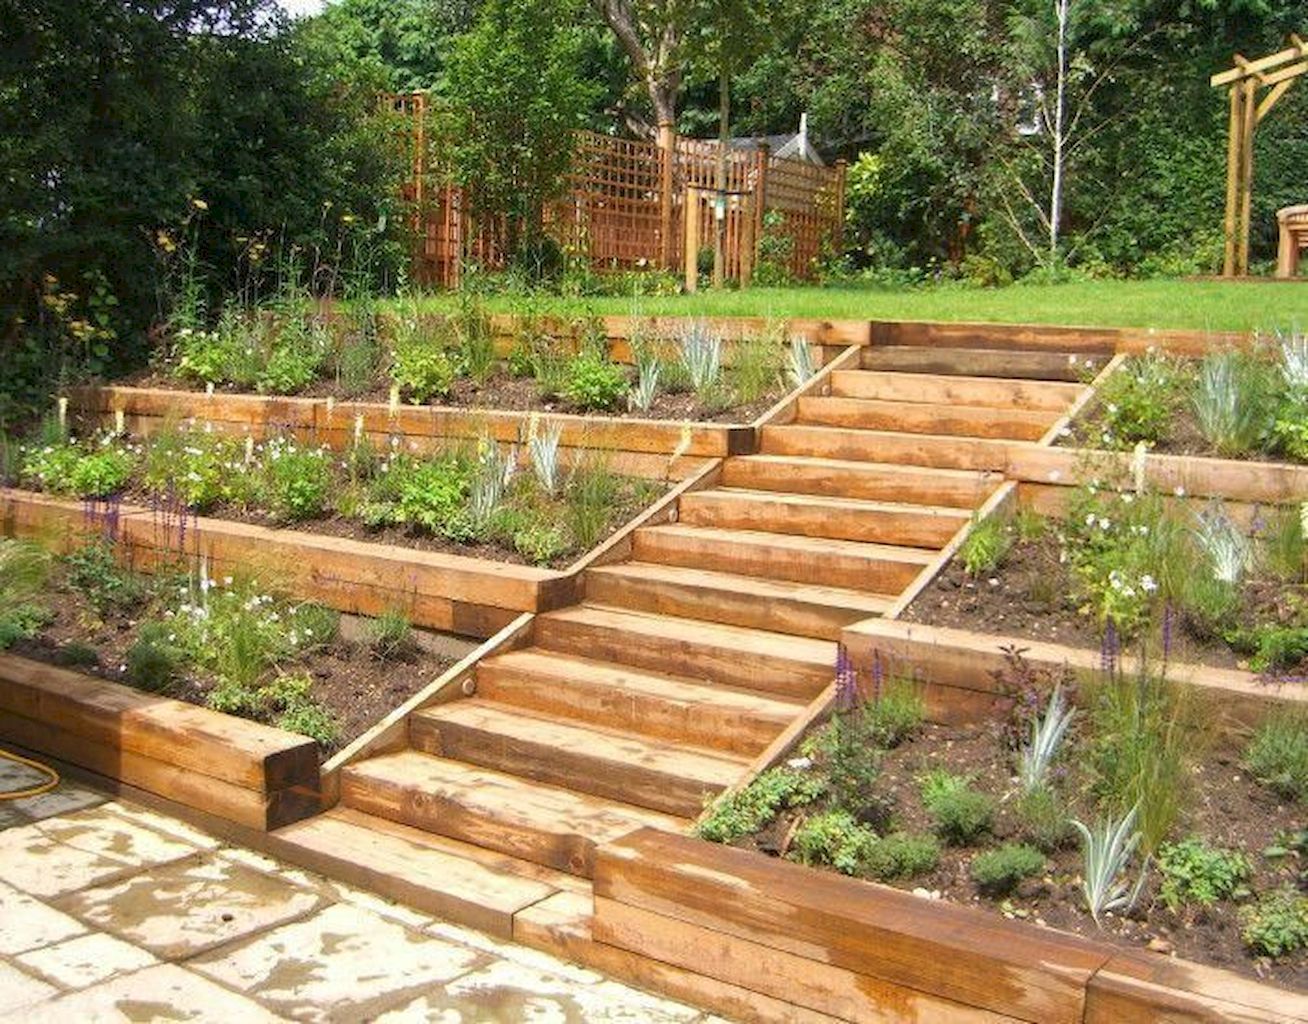 75 Stunning Backyard Vegetable Garden Design Ideas -   16 garden design backyard ideas